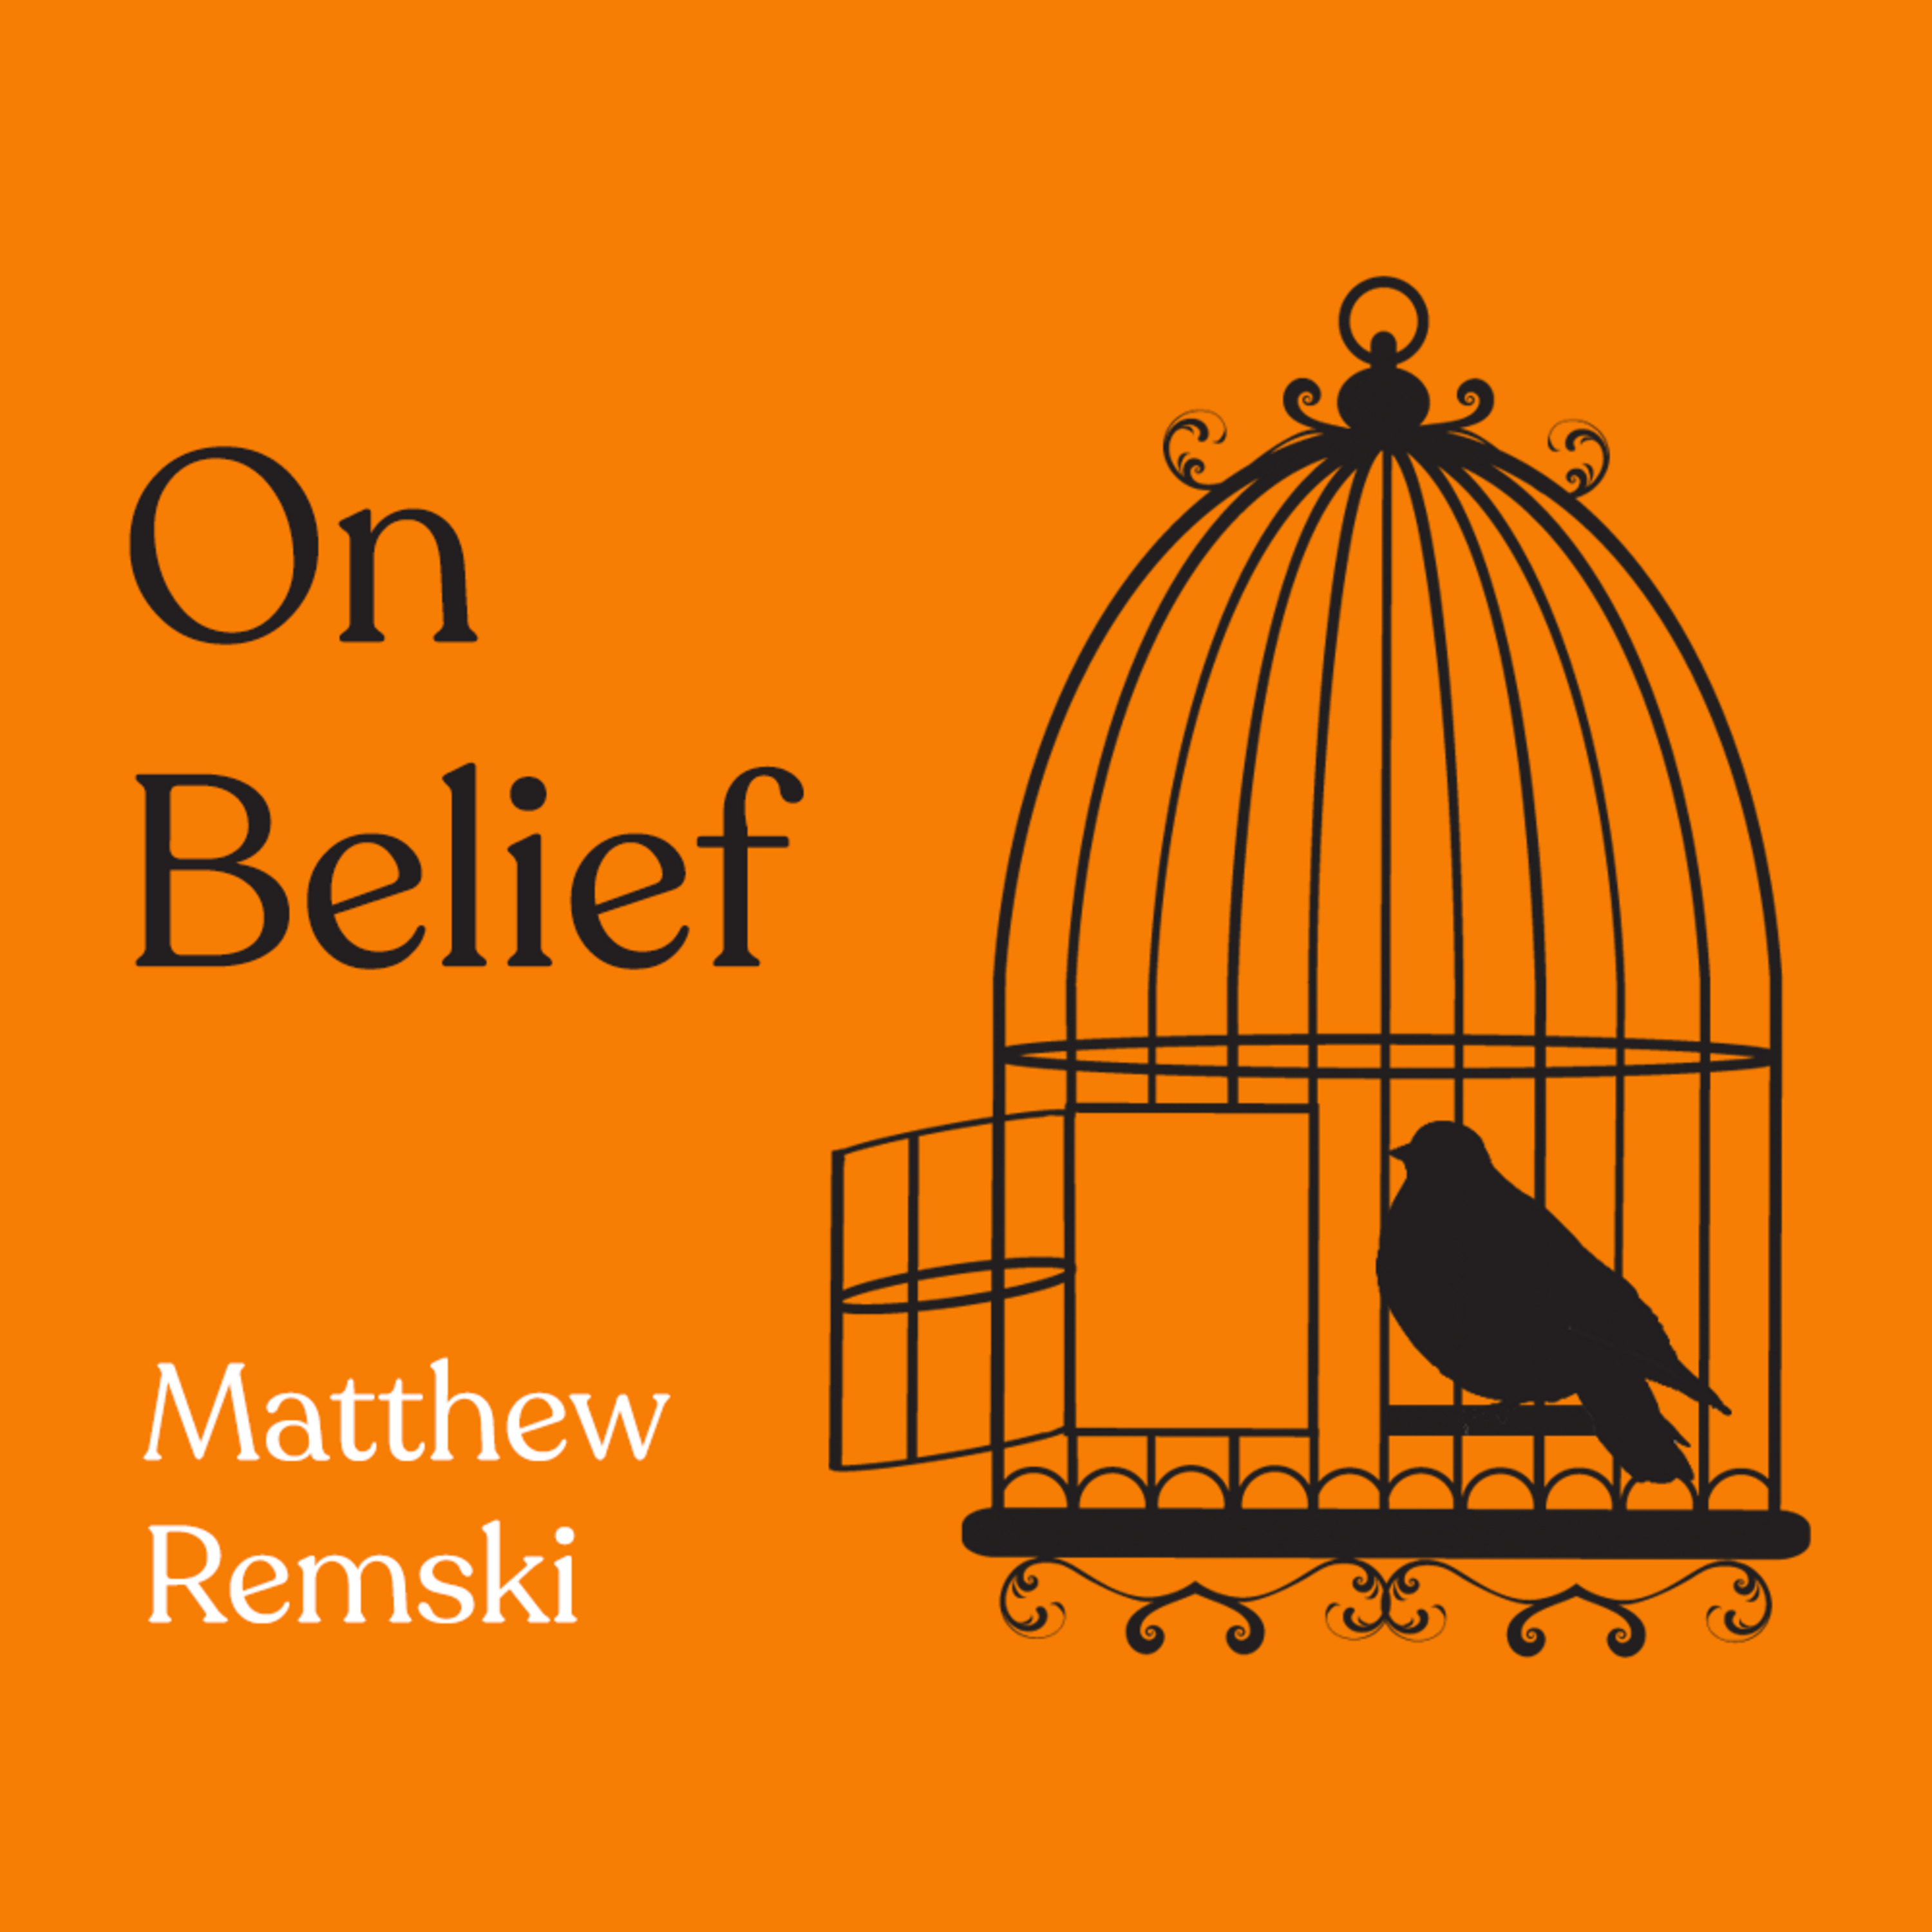 Episode 315: Matthew Remski